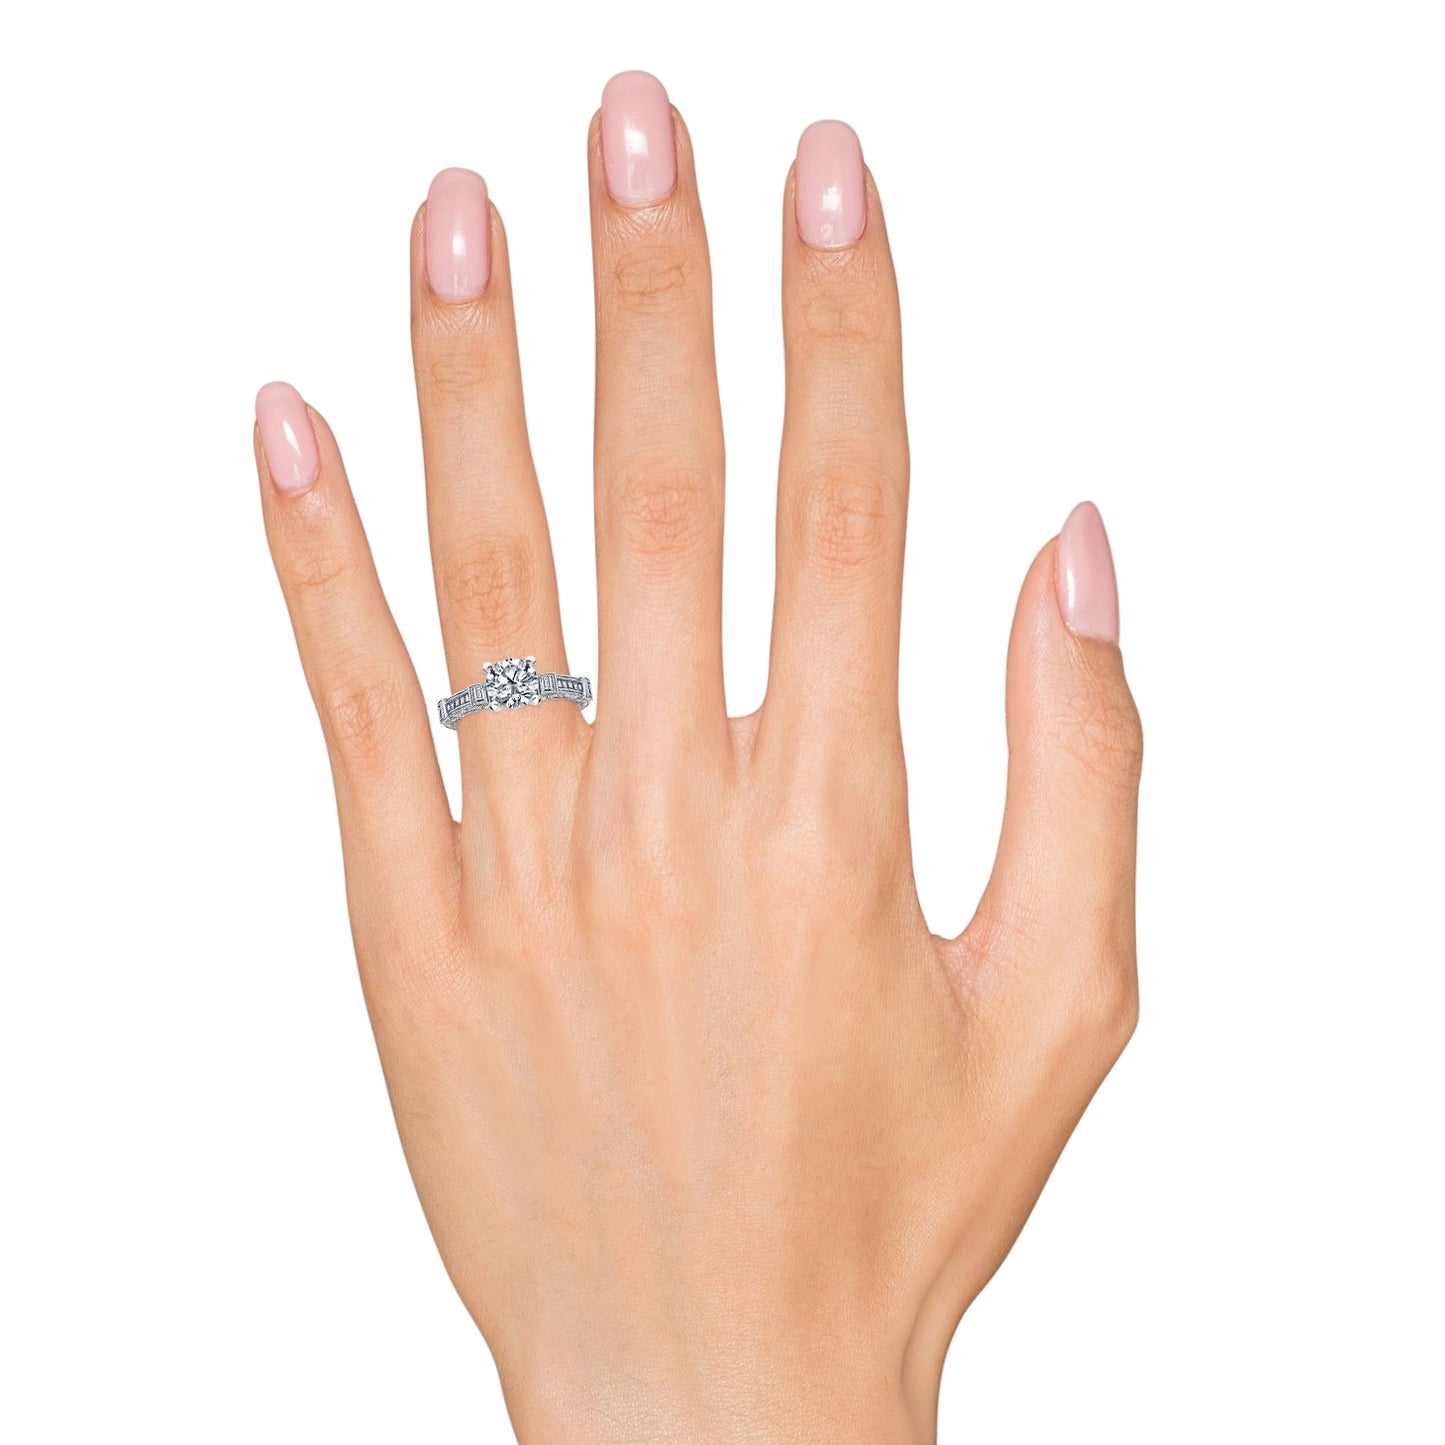 Modern Channel Set Engraved Diamond Engagement Ring